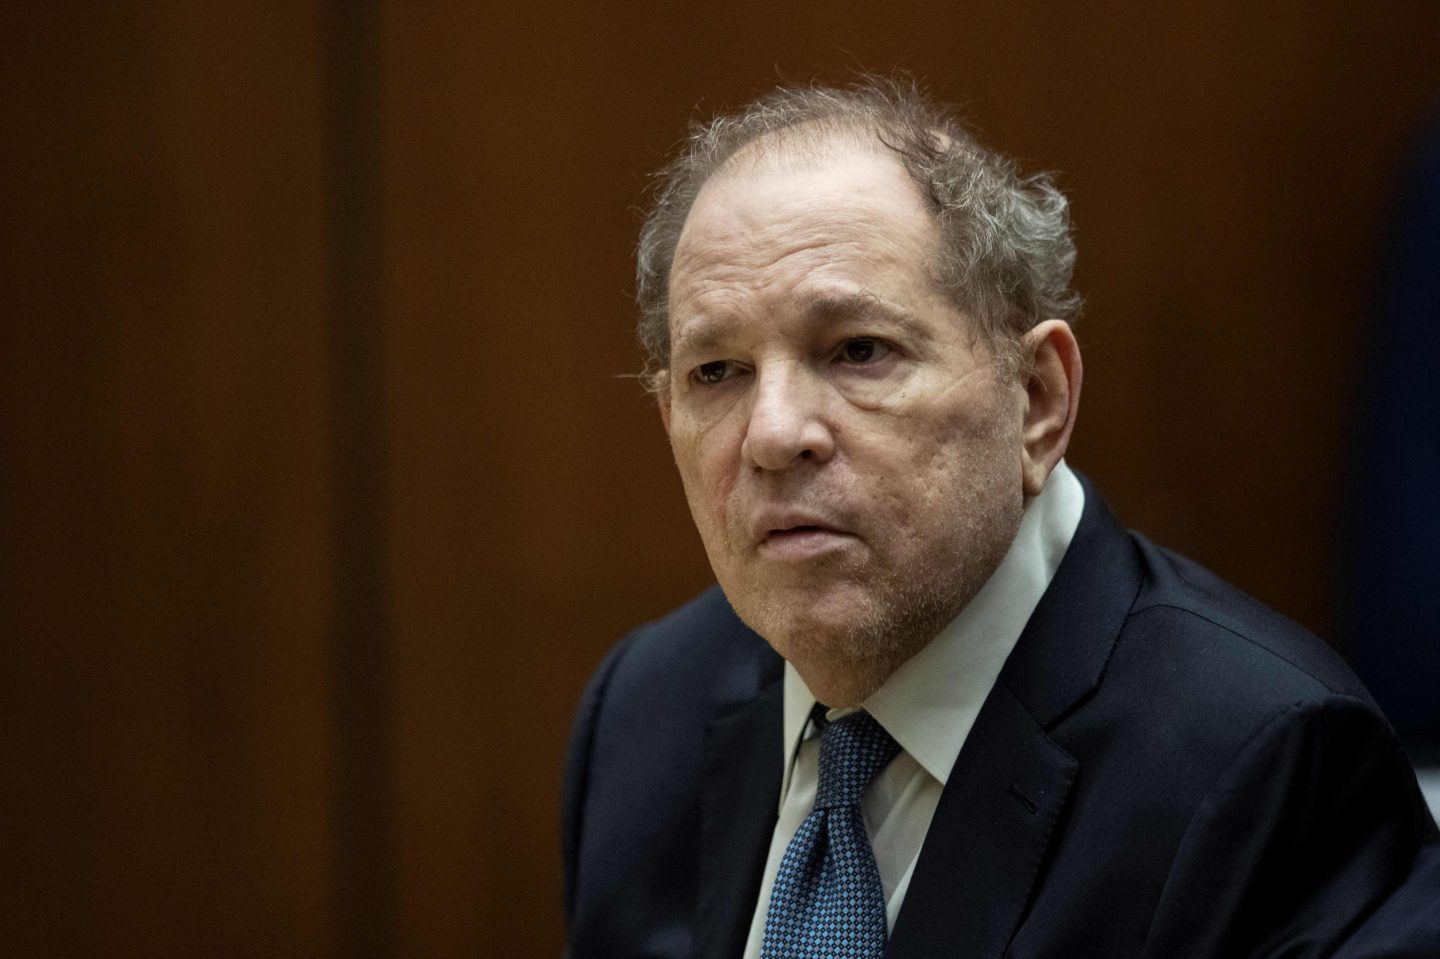 ‘An abuse of judicial discretion’: New York’s highest court overturns Harvey Weinstein’s 2020 rape conviction